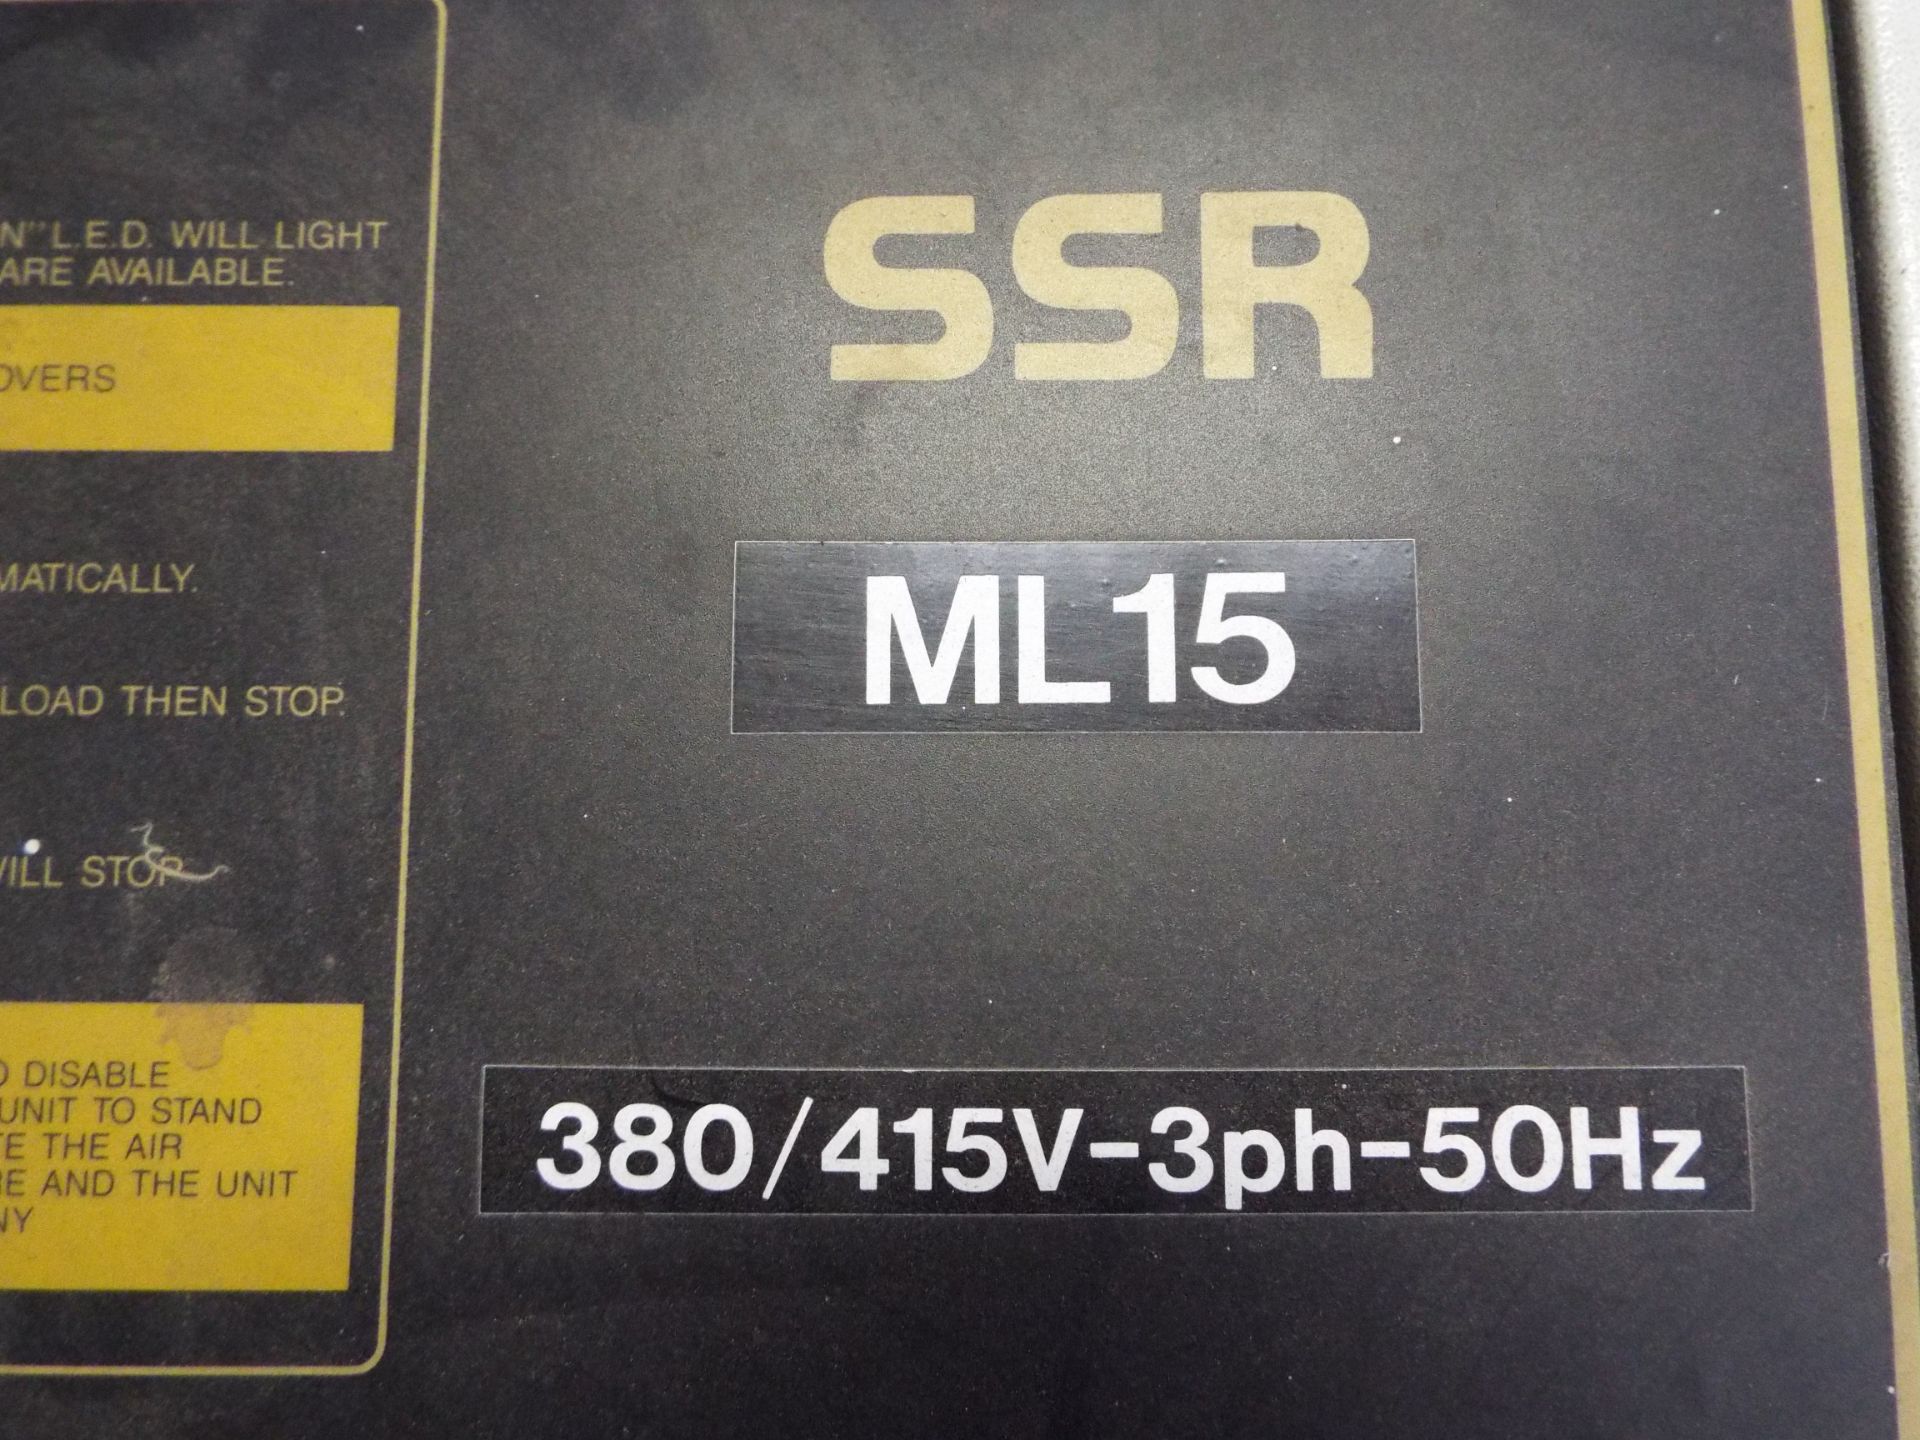 Ingersoll Rand SSR ML15 Compressor,Rednal Air Receiver & Ingersoll Rand Oil Separator - Image 2 of 11